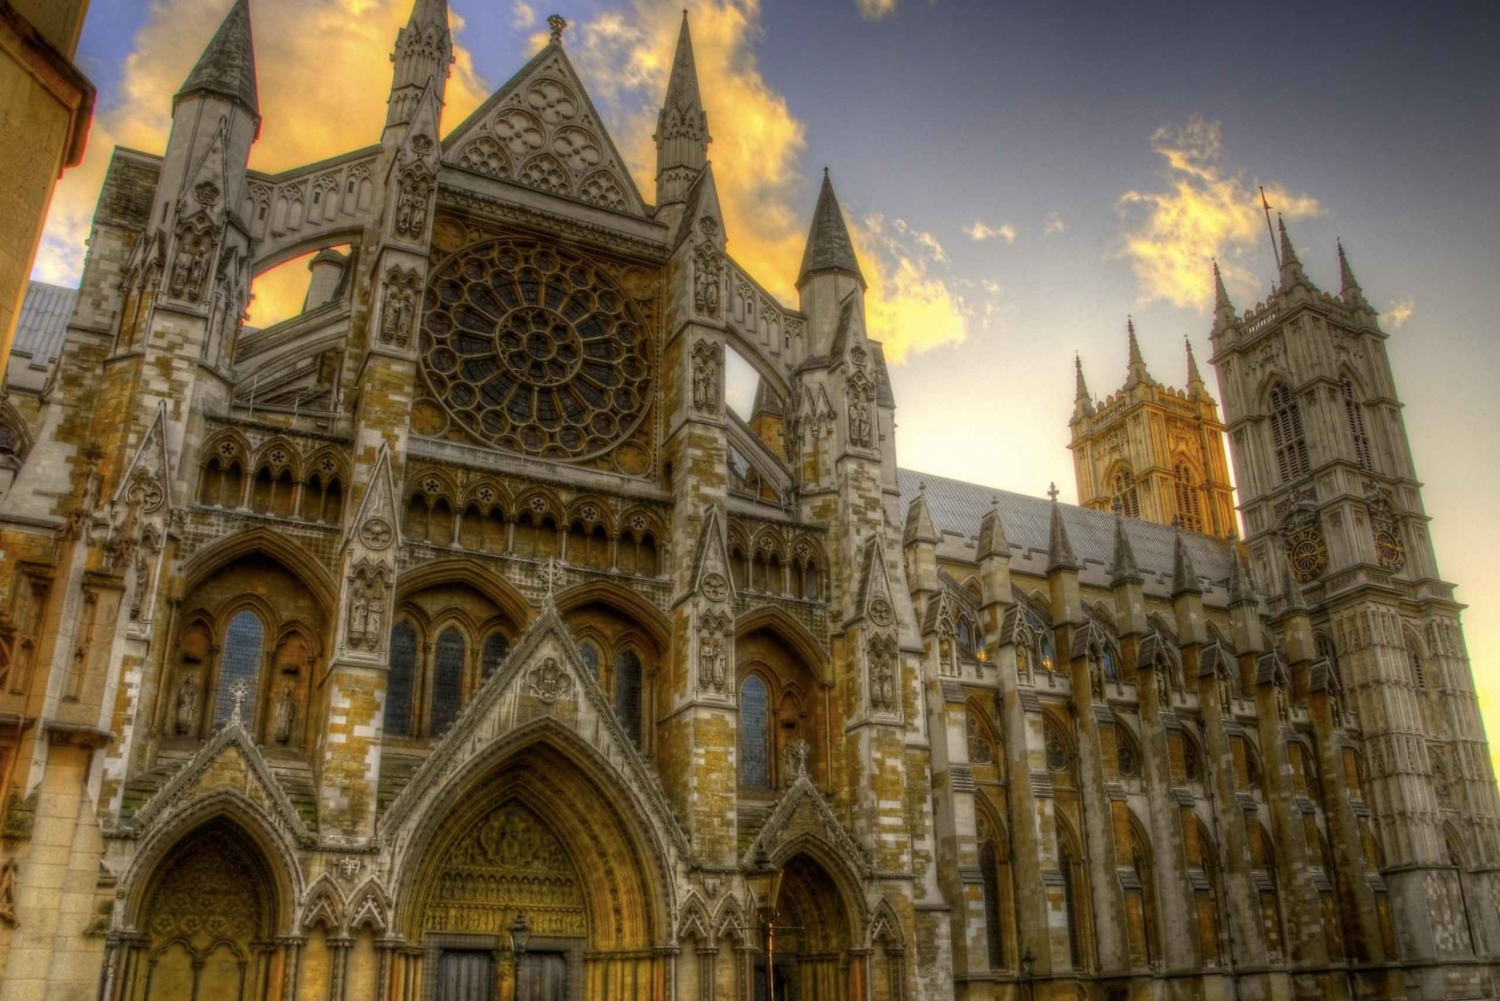 Londres : Visite à pied de Westminster et visite de l'abbaye de Westminster